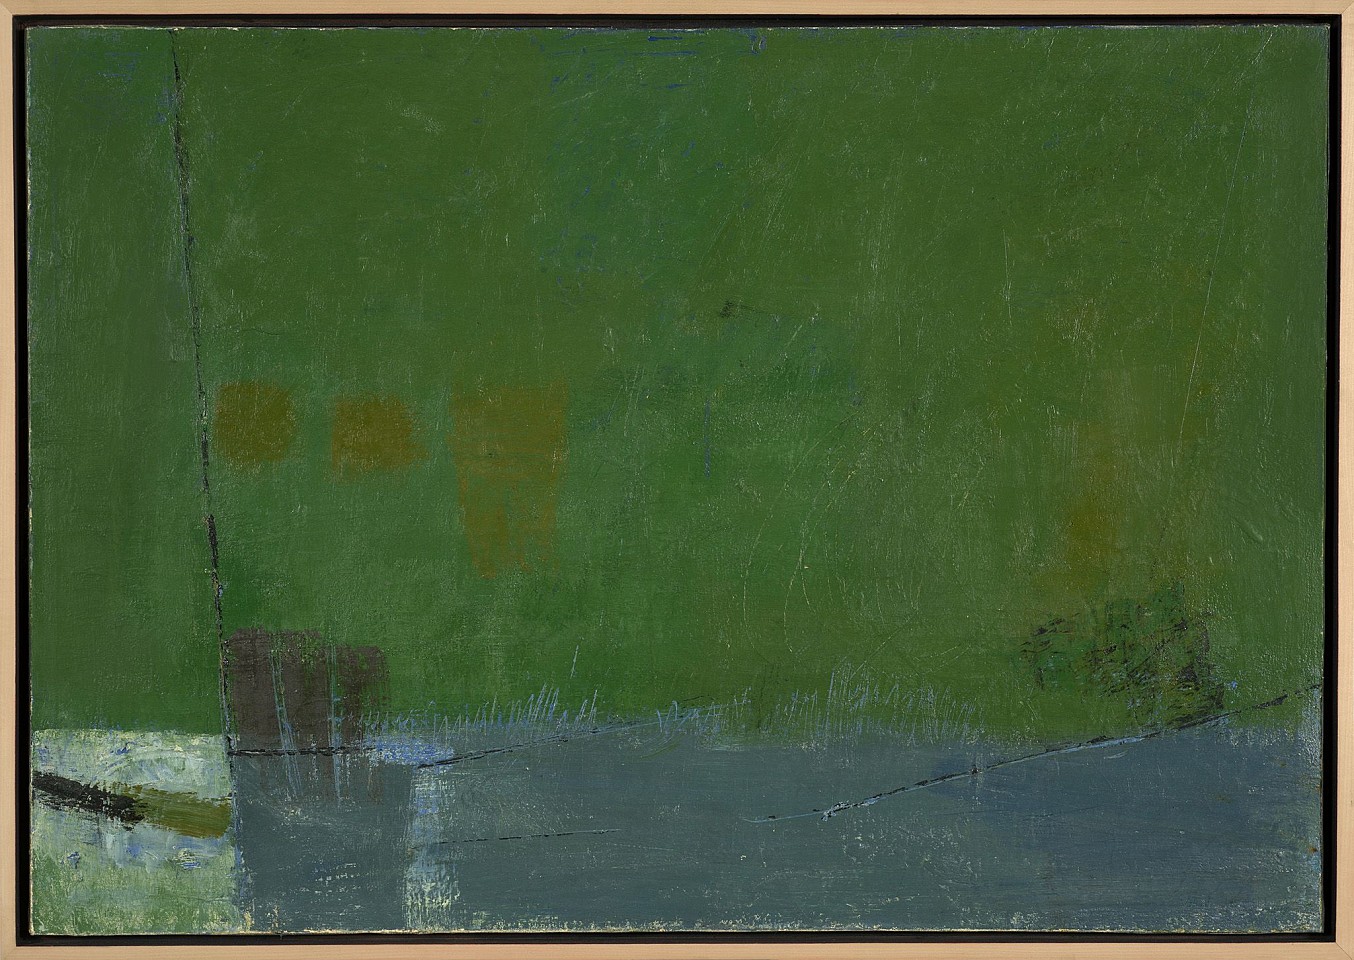 Irene Pattinson, Spring Rain, 1959
Oil on canvas, 28 x 40 in. (71.1 x 101.6 cm)
PAT-00001